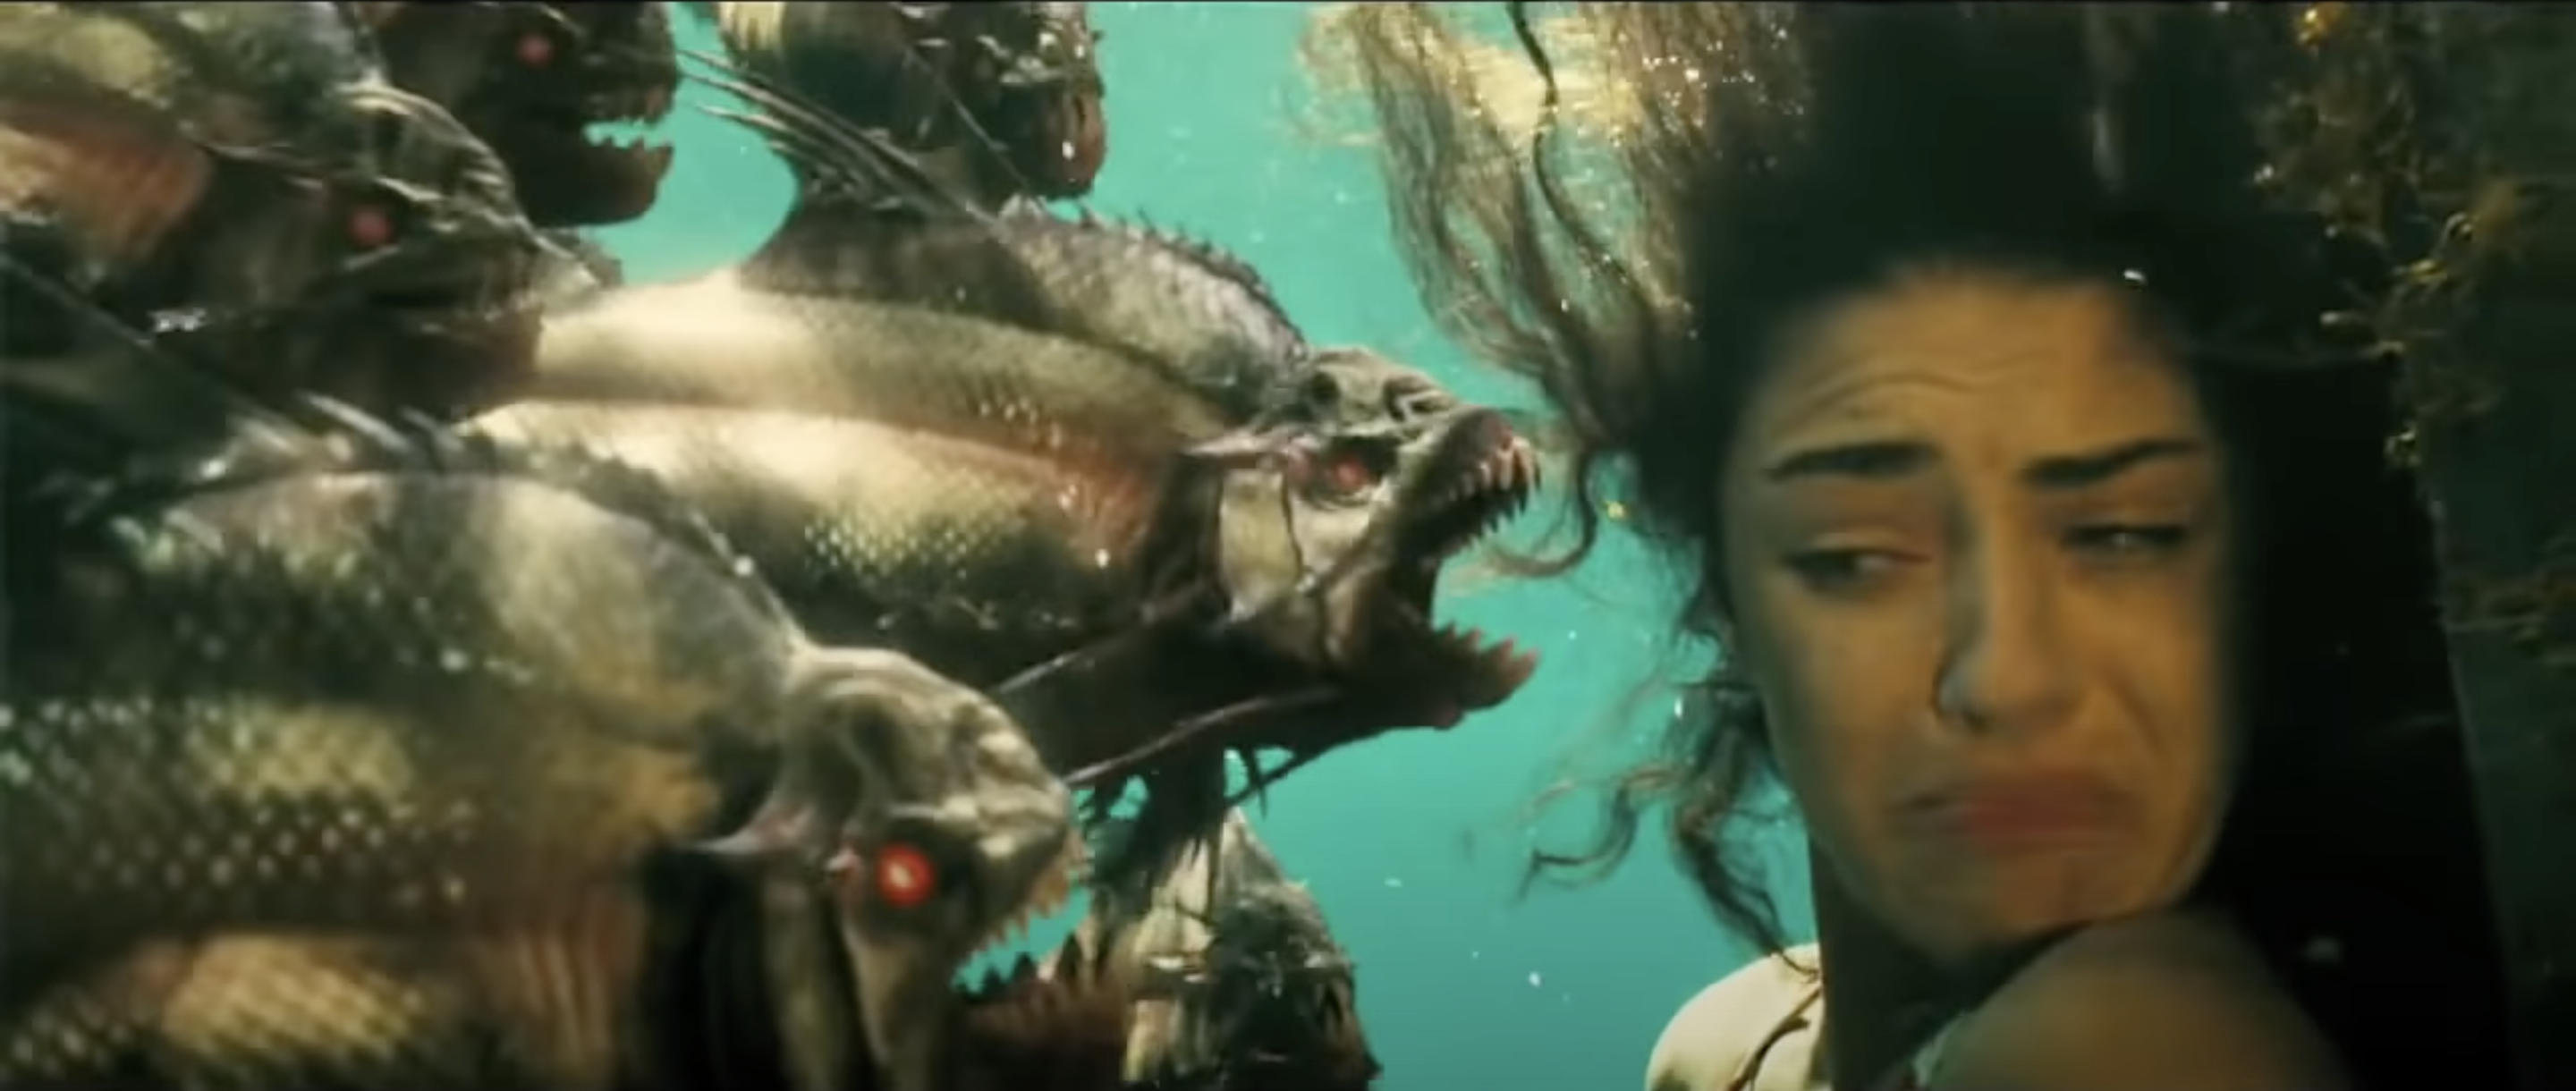 piranha 3d underwater scene